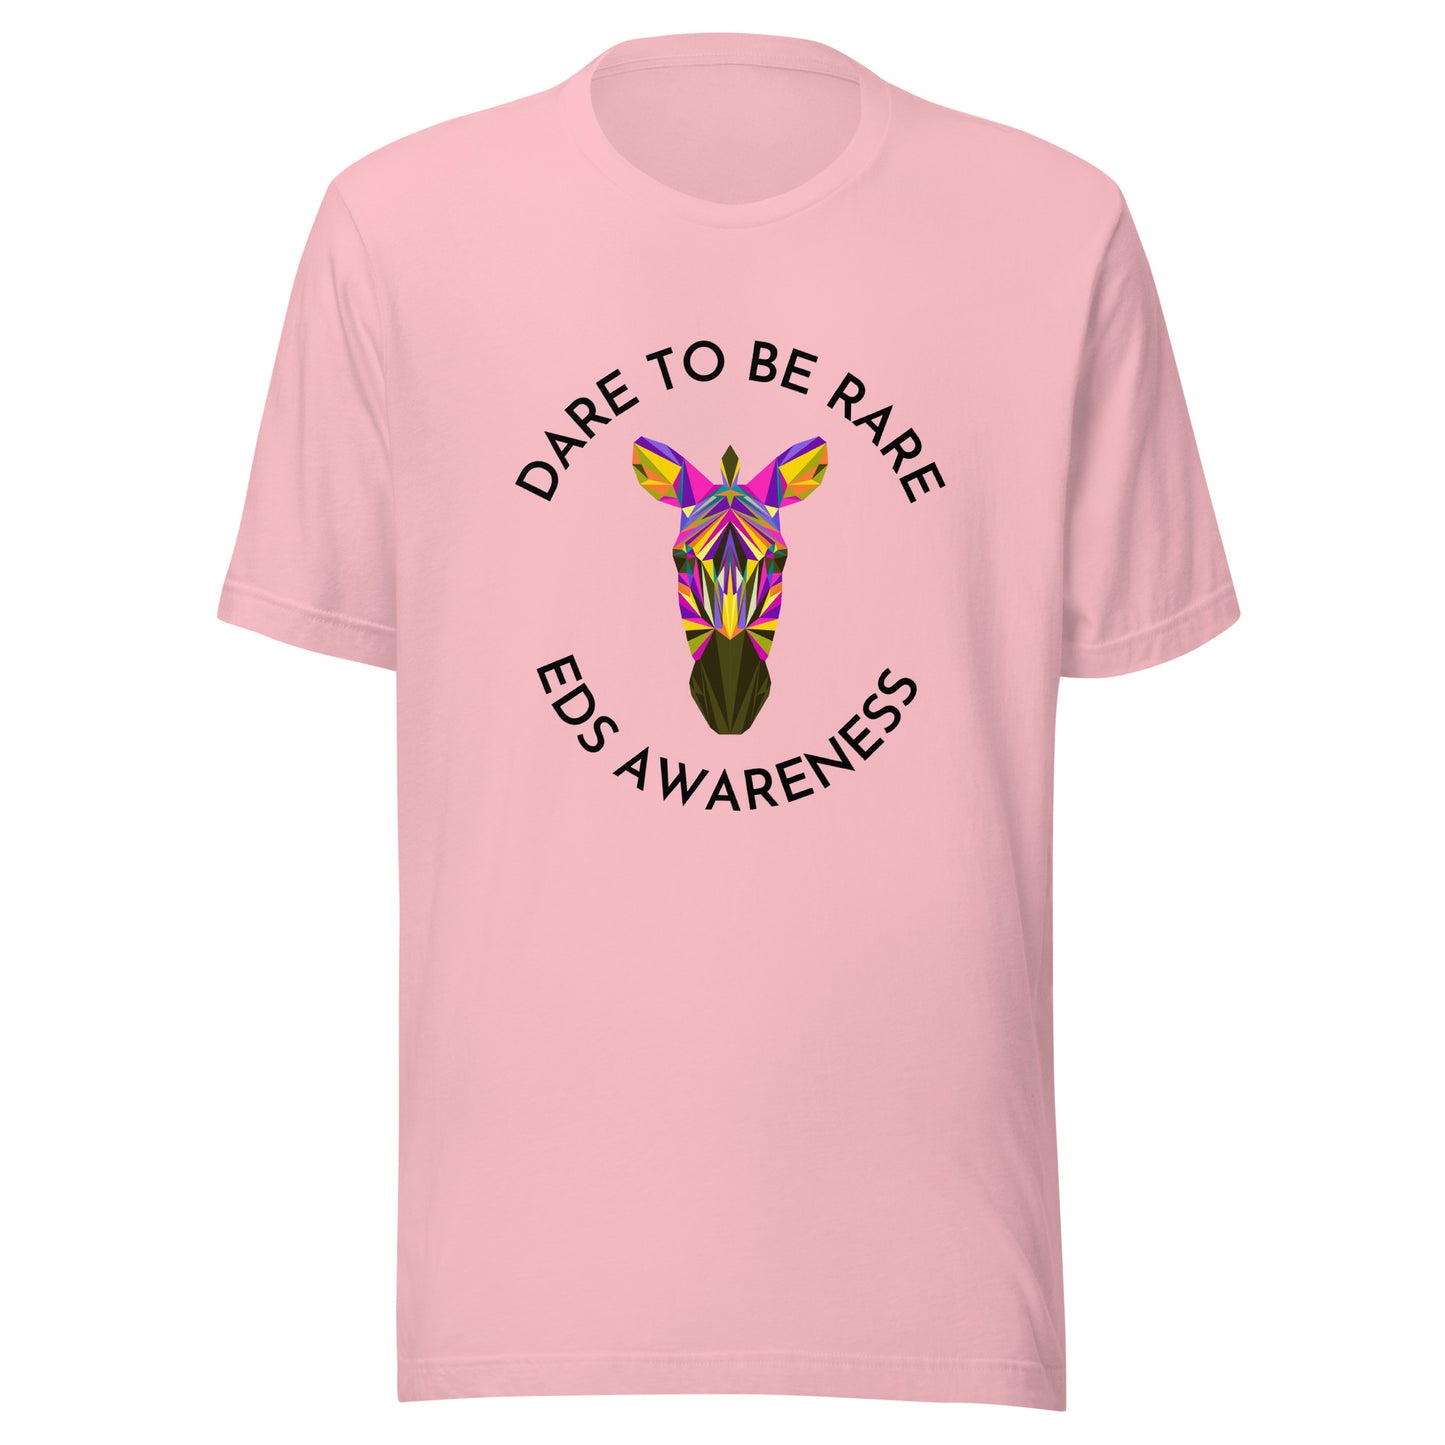 Ehlers-Danlos Syndrome Awareness unisex t-shirt #2 Unisex t-shirt